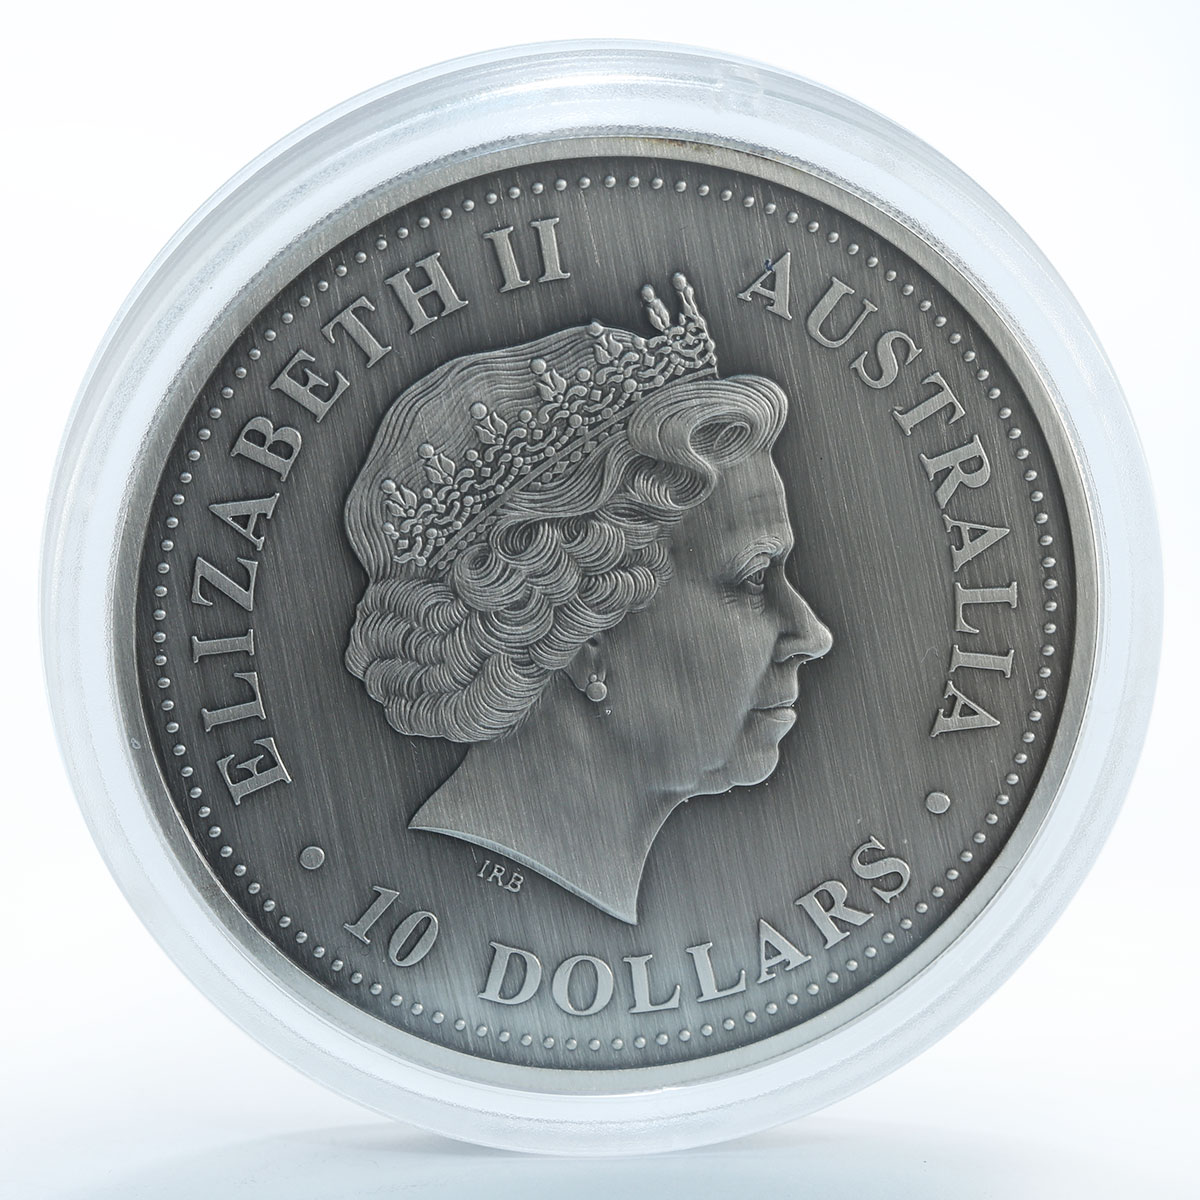 Australia 10 dollars Kookaburra Evolution of Time silver proof coin 2002